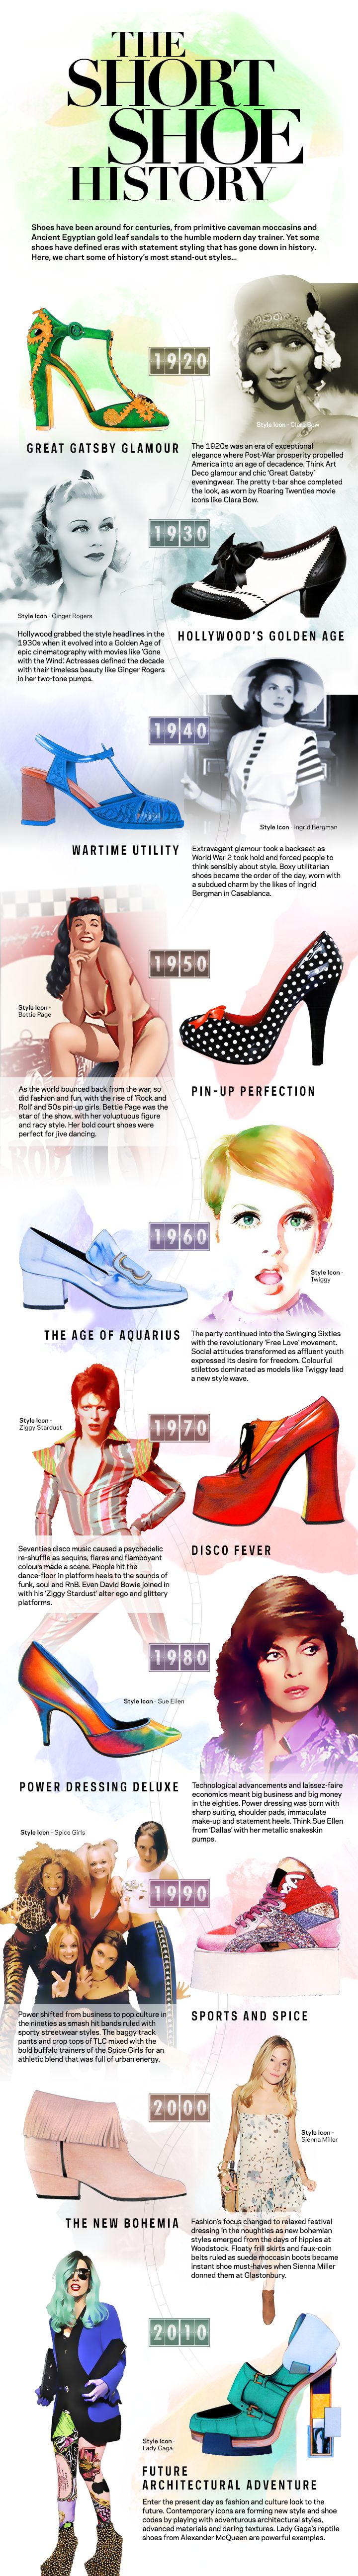 The Short Shoe History